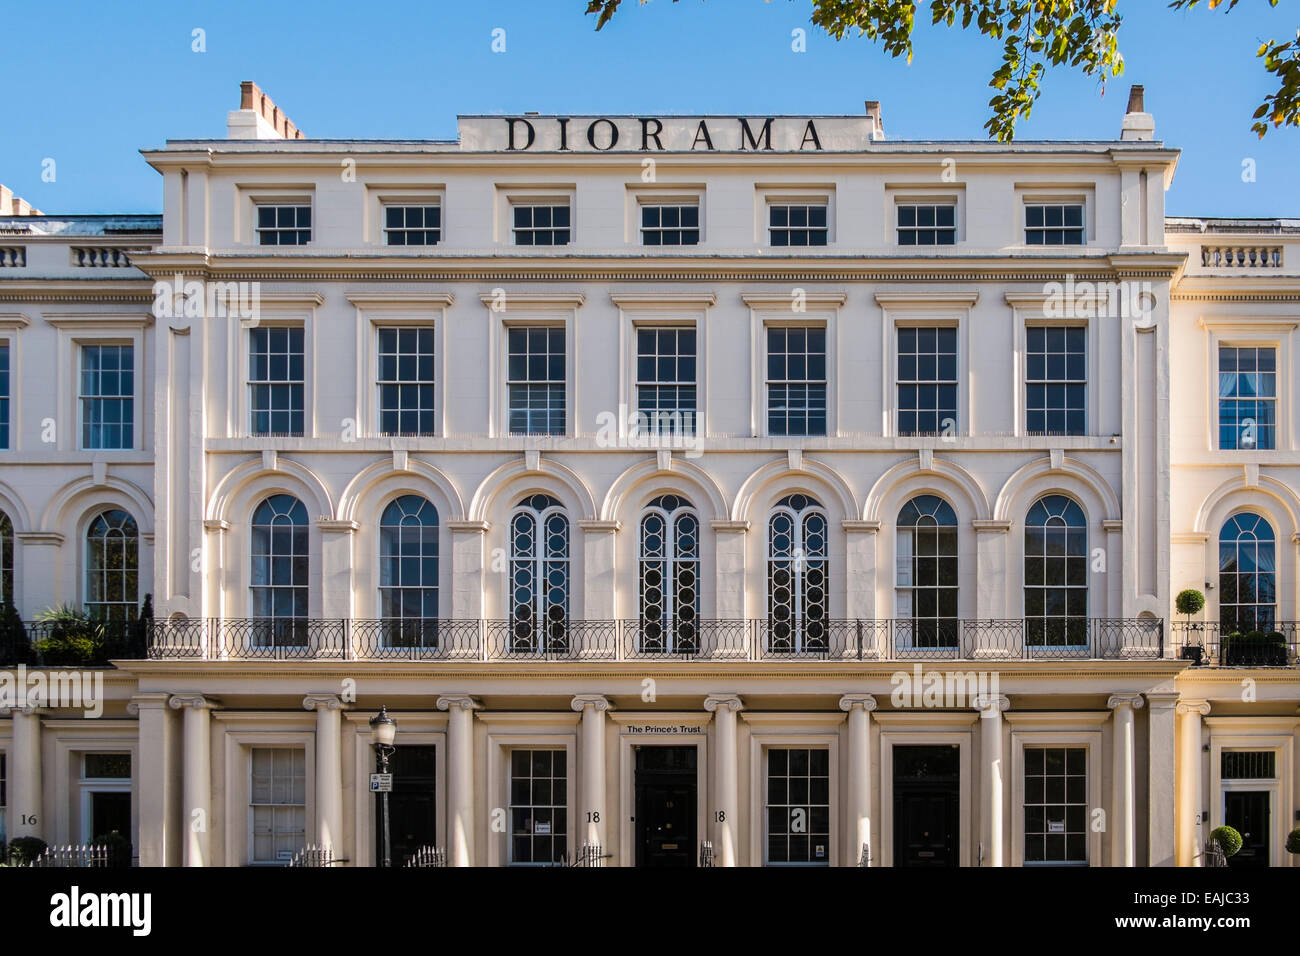 Diorama Arts Building Prince's Trust - Londres Banque D'Images